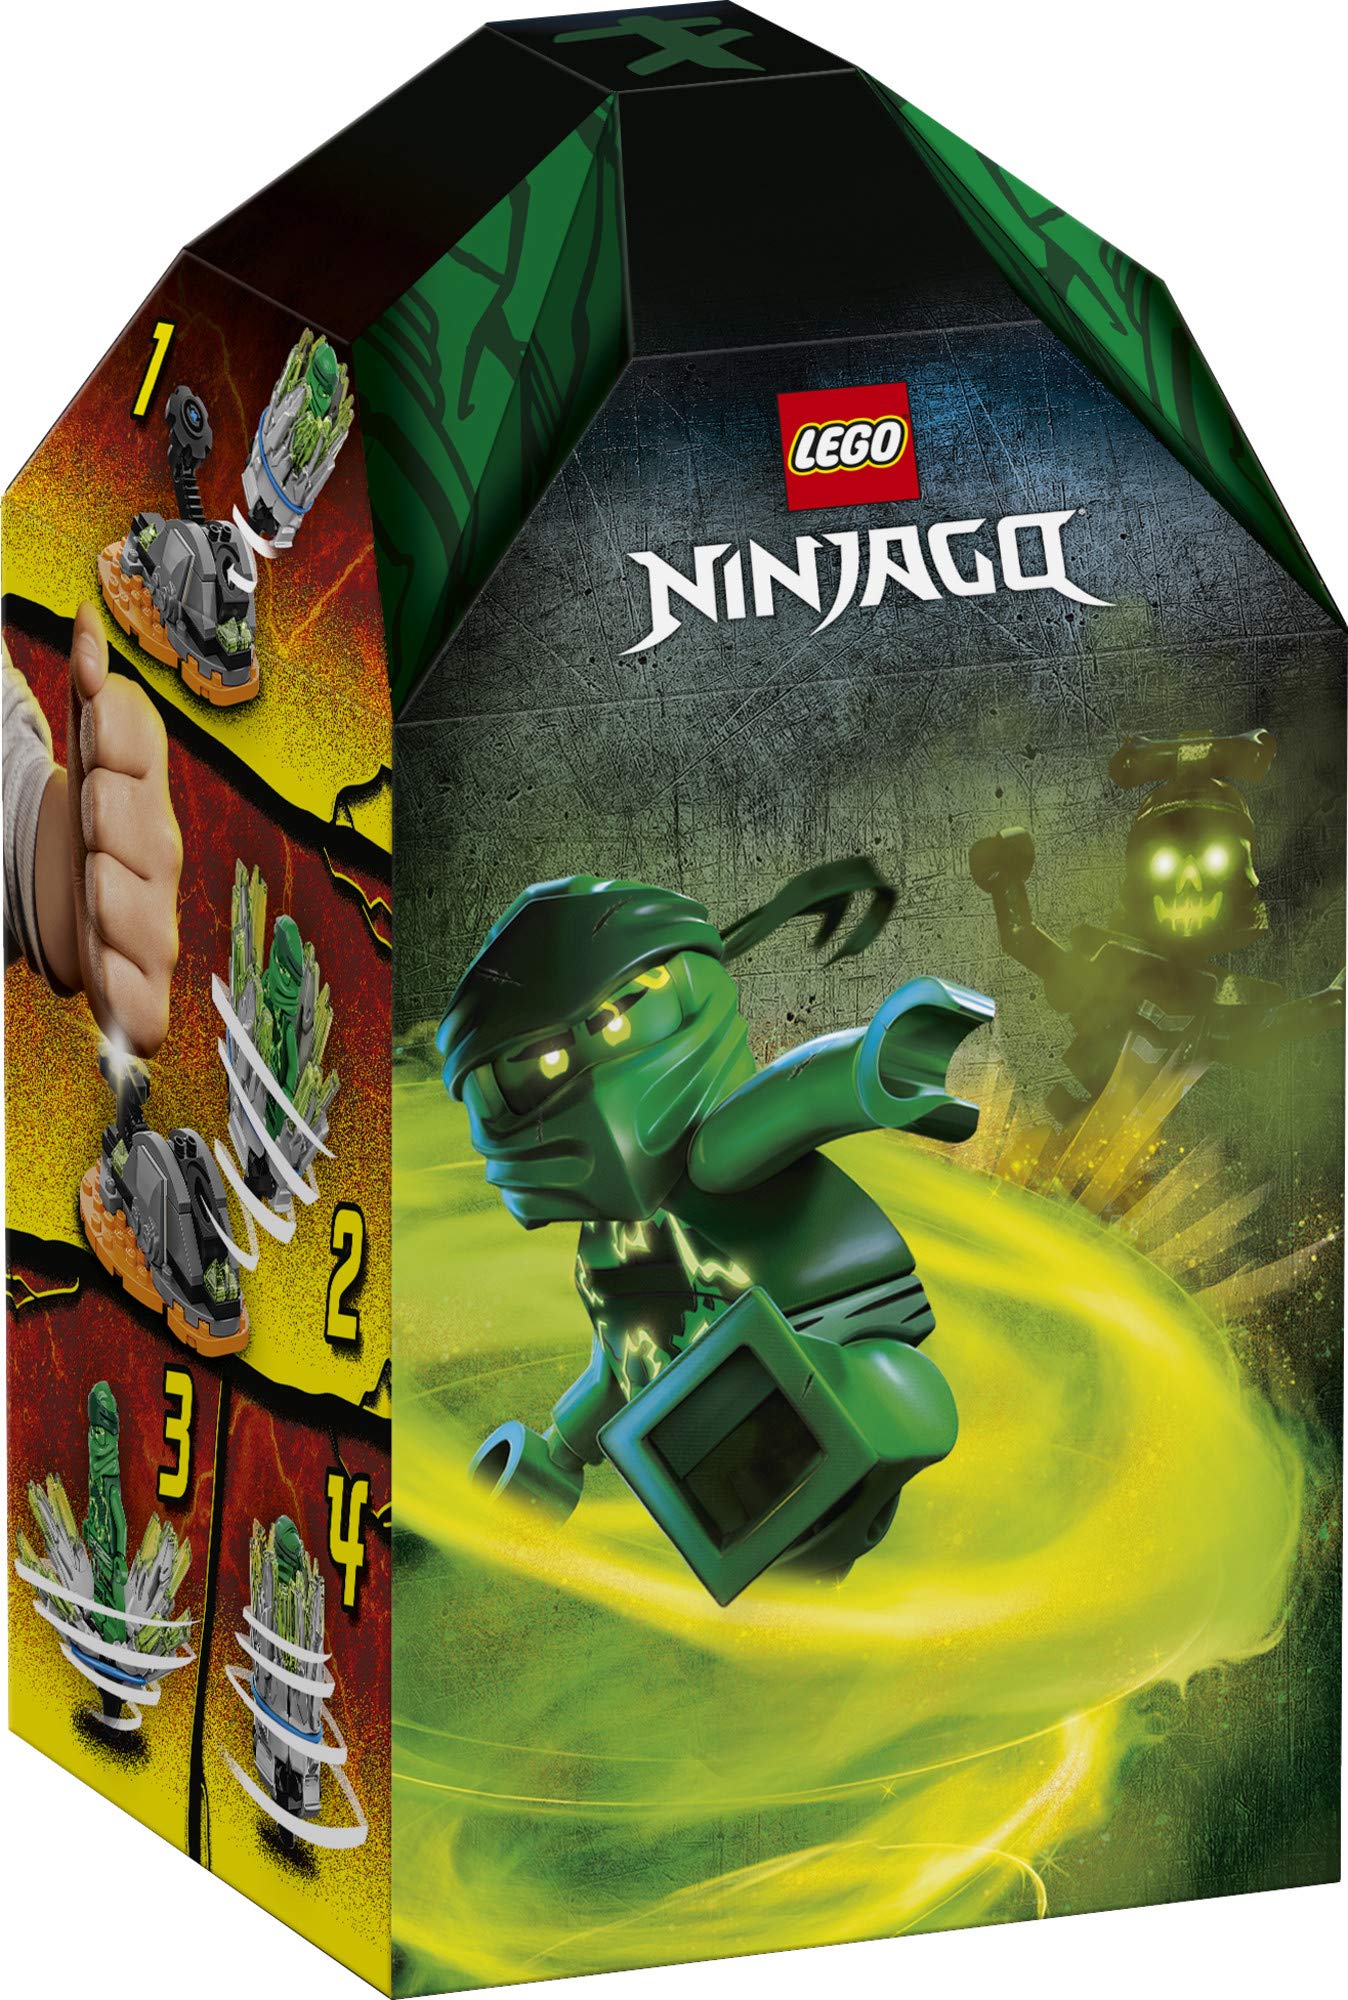 LEGO NINJAGO Spinjitzu Burst - Lloyd 70687 Ninja Playset Building Kit Featuring Ninja Action Figure (48 Pieces)